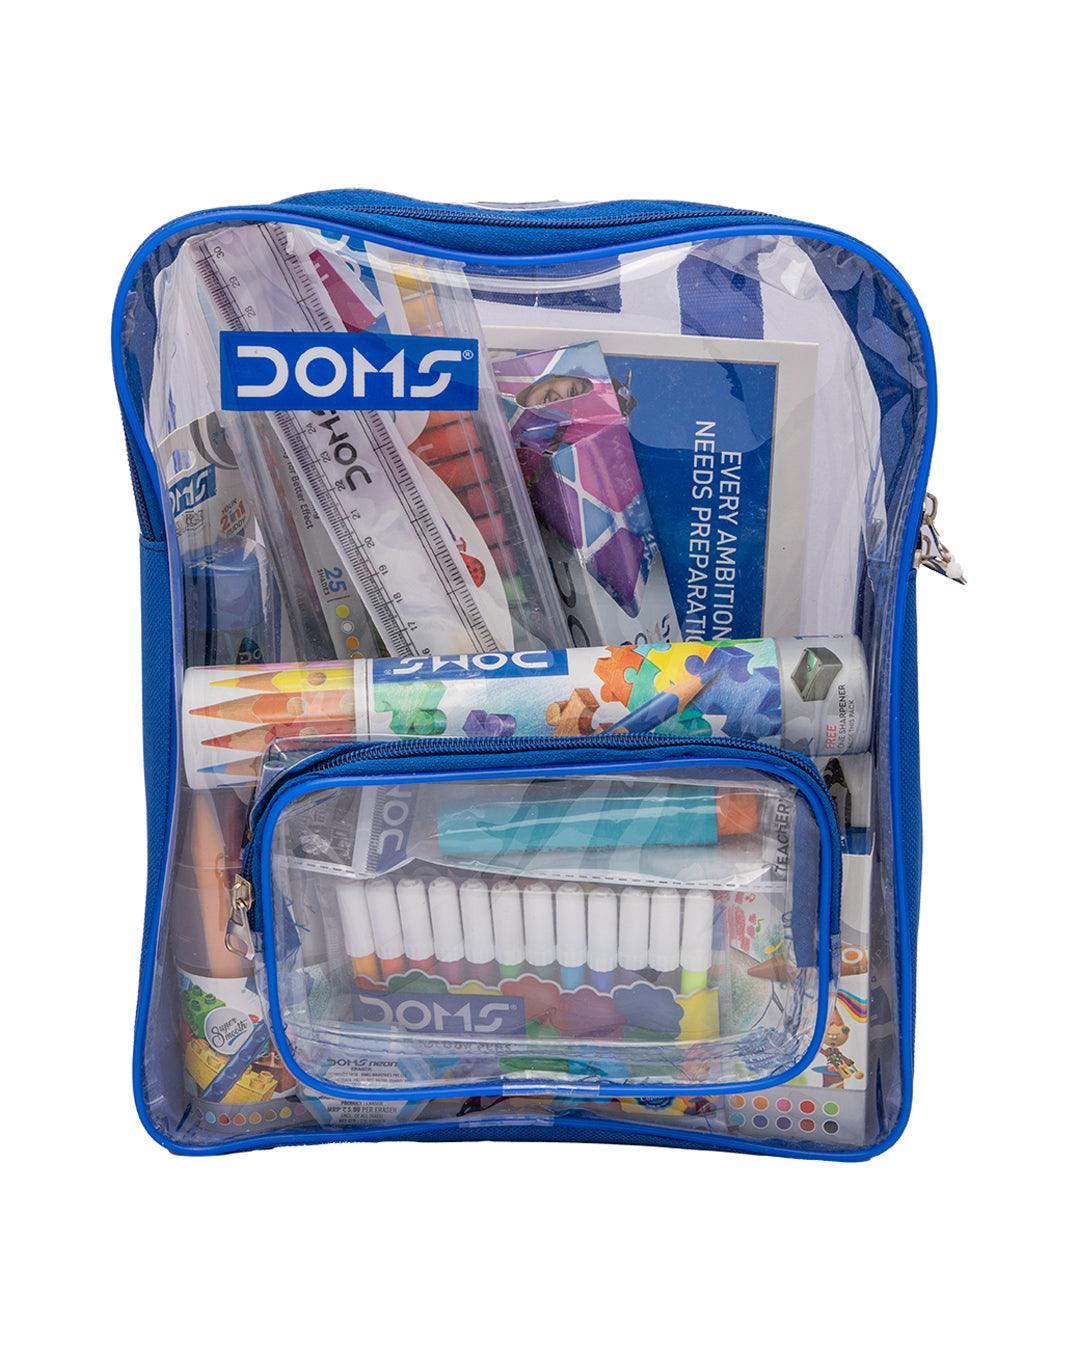 Doms Gifting Range For Kids Pencil Smart Kit With Transparent Zipper Bag,  Multicolour